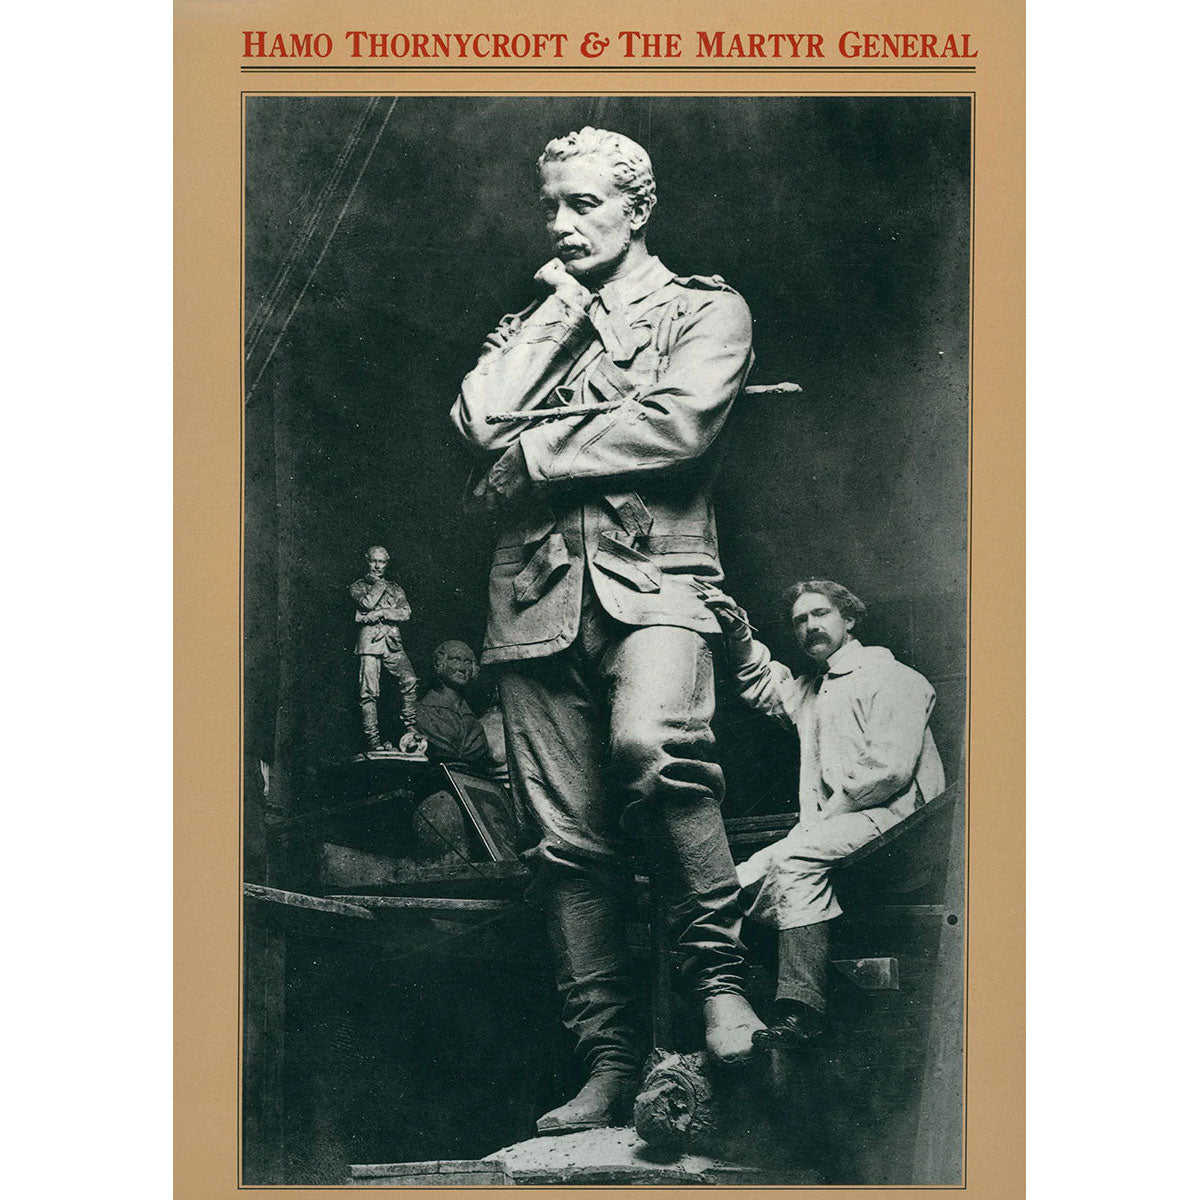 Hamo Thornycroft & The Martyr General